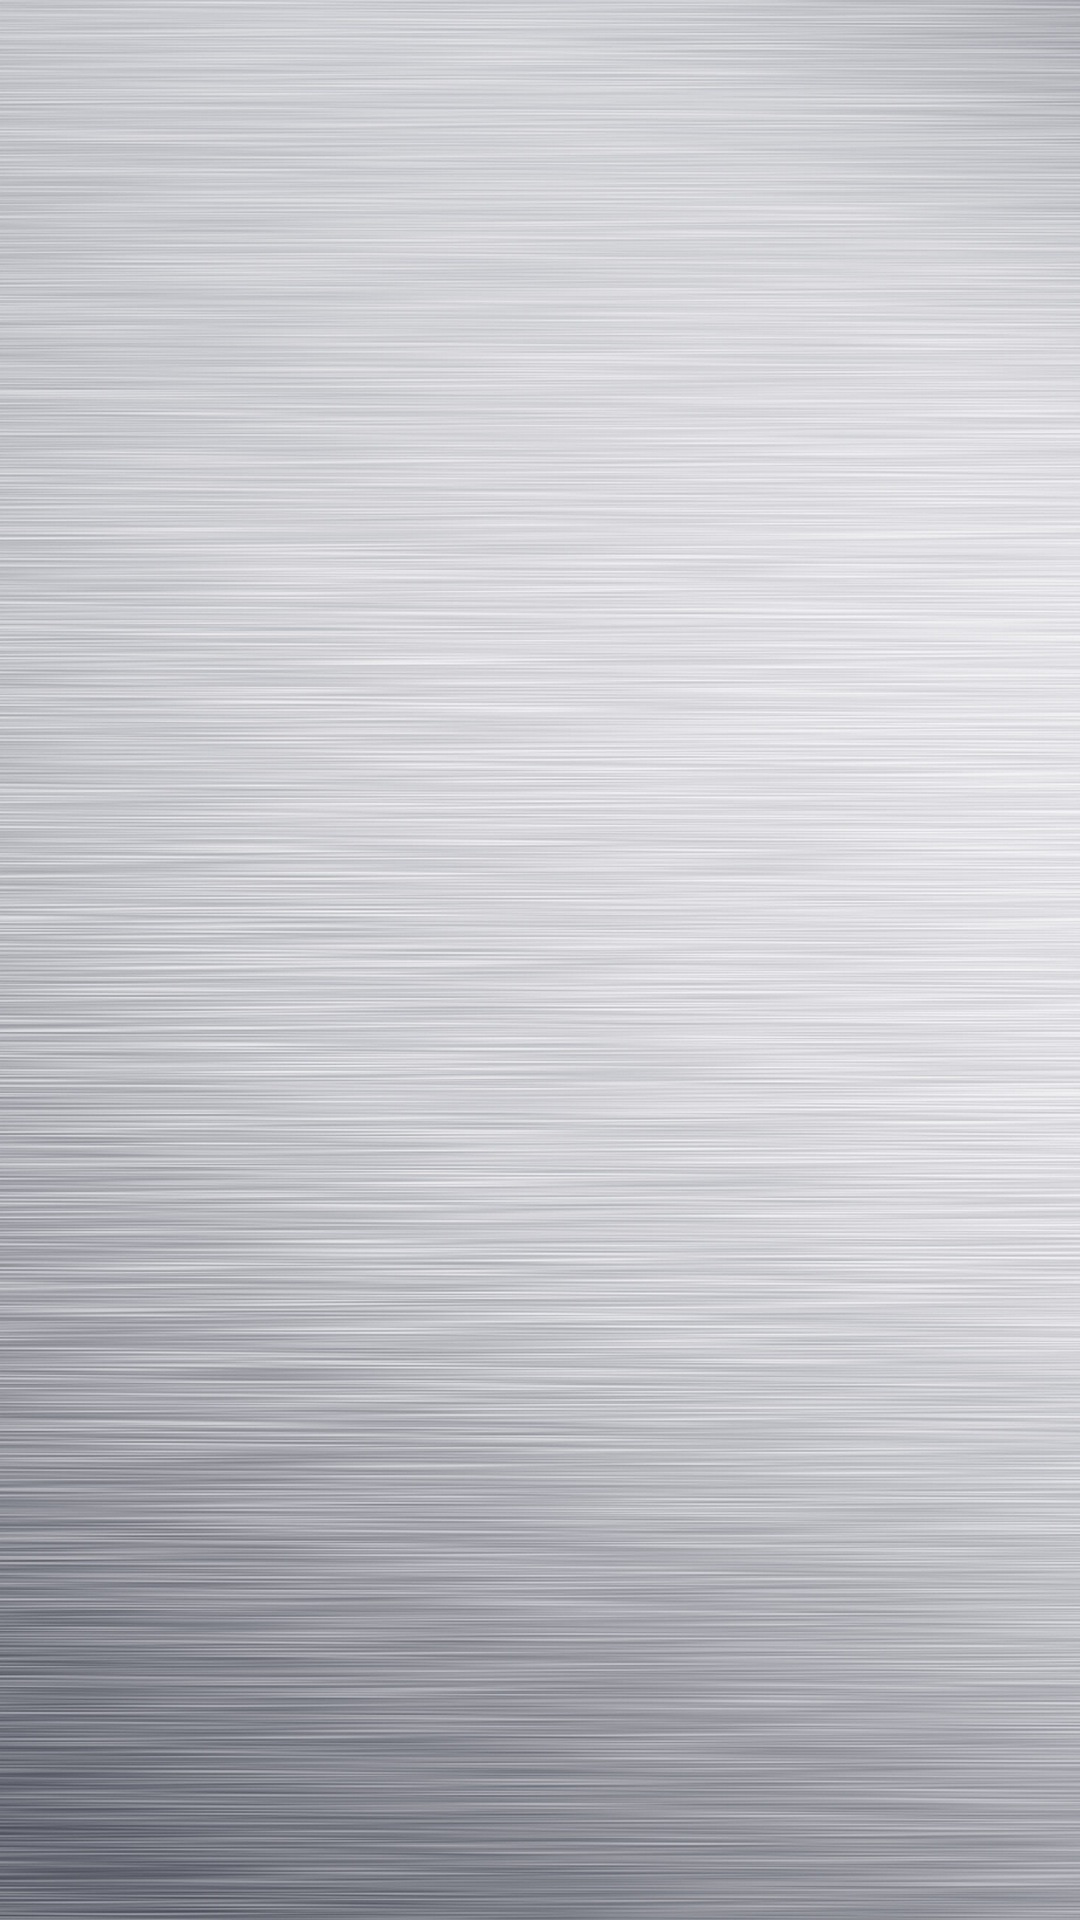 Simple Horizontal Brushed Metal Surface iPhone 6 Plus HD Wallpaper